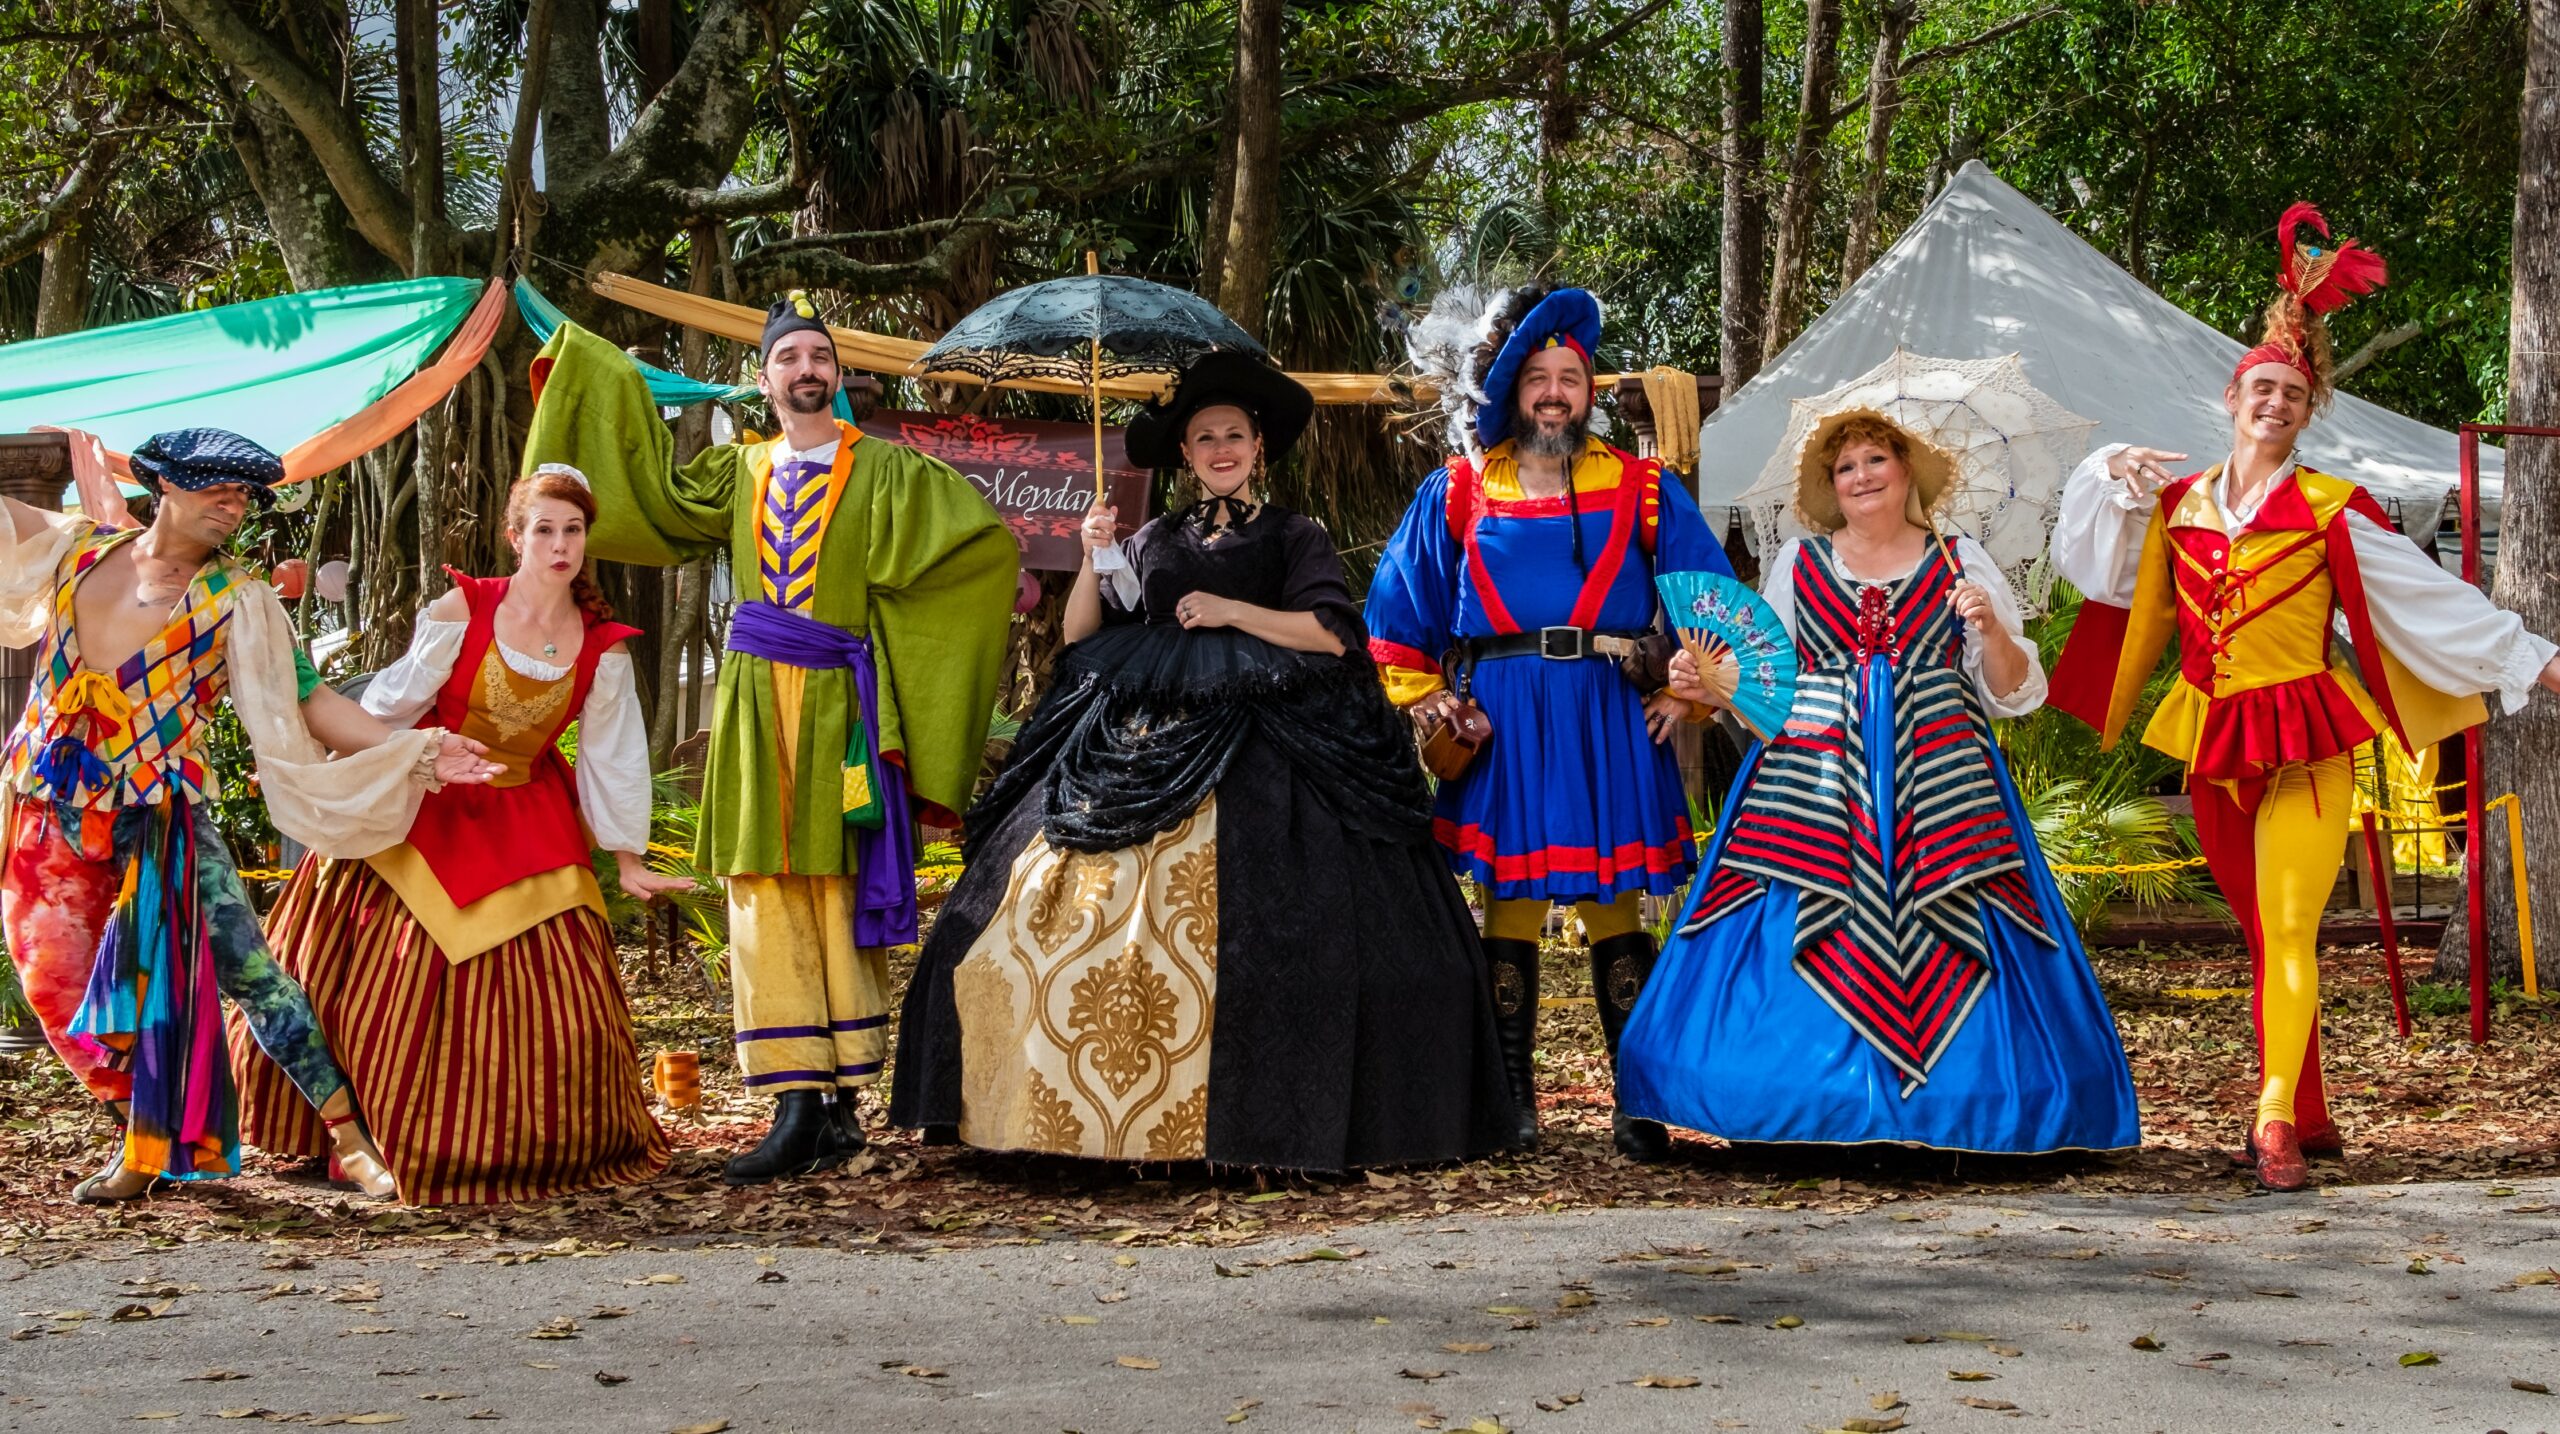 The Orlando Renaissance Festival at Bill Frederick Park